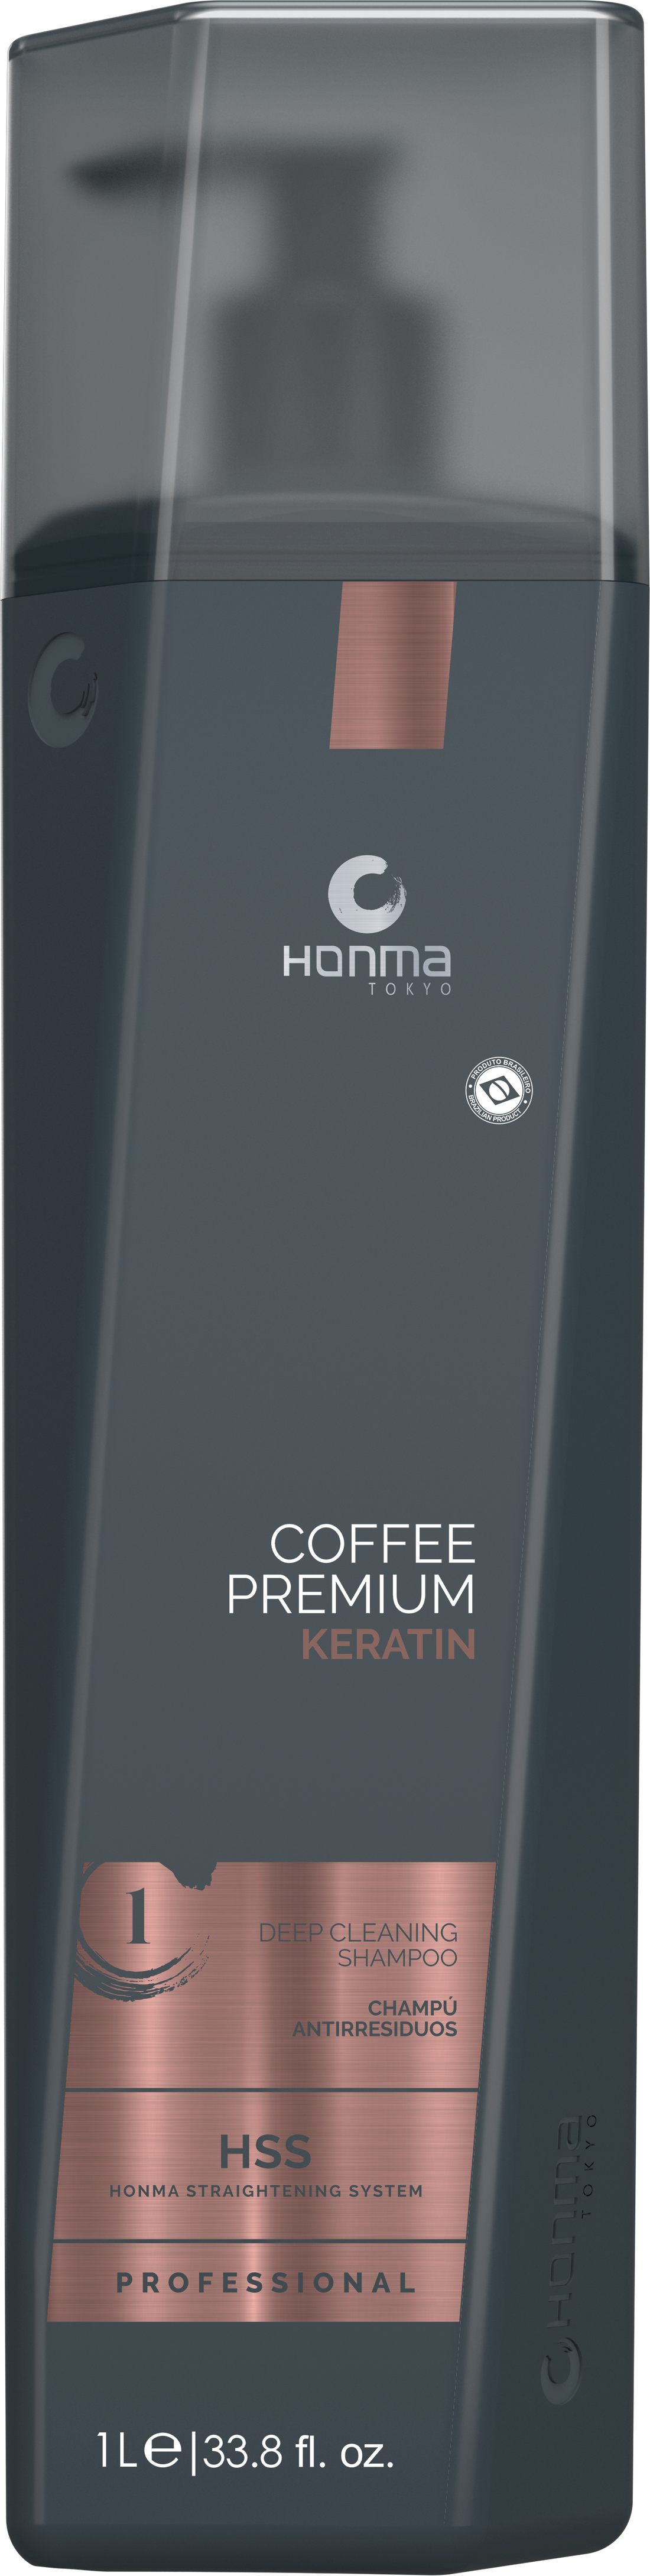 COFFEE PREMIUM KERATIN SHAMPOO ANTIRESIDUOS - PROFESSIONAL